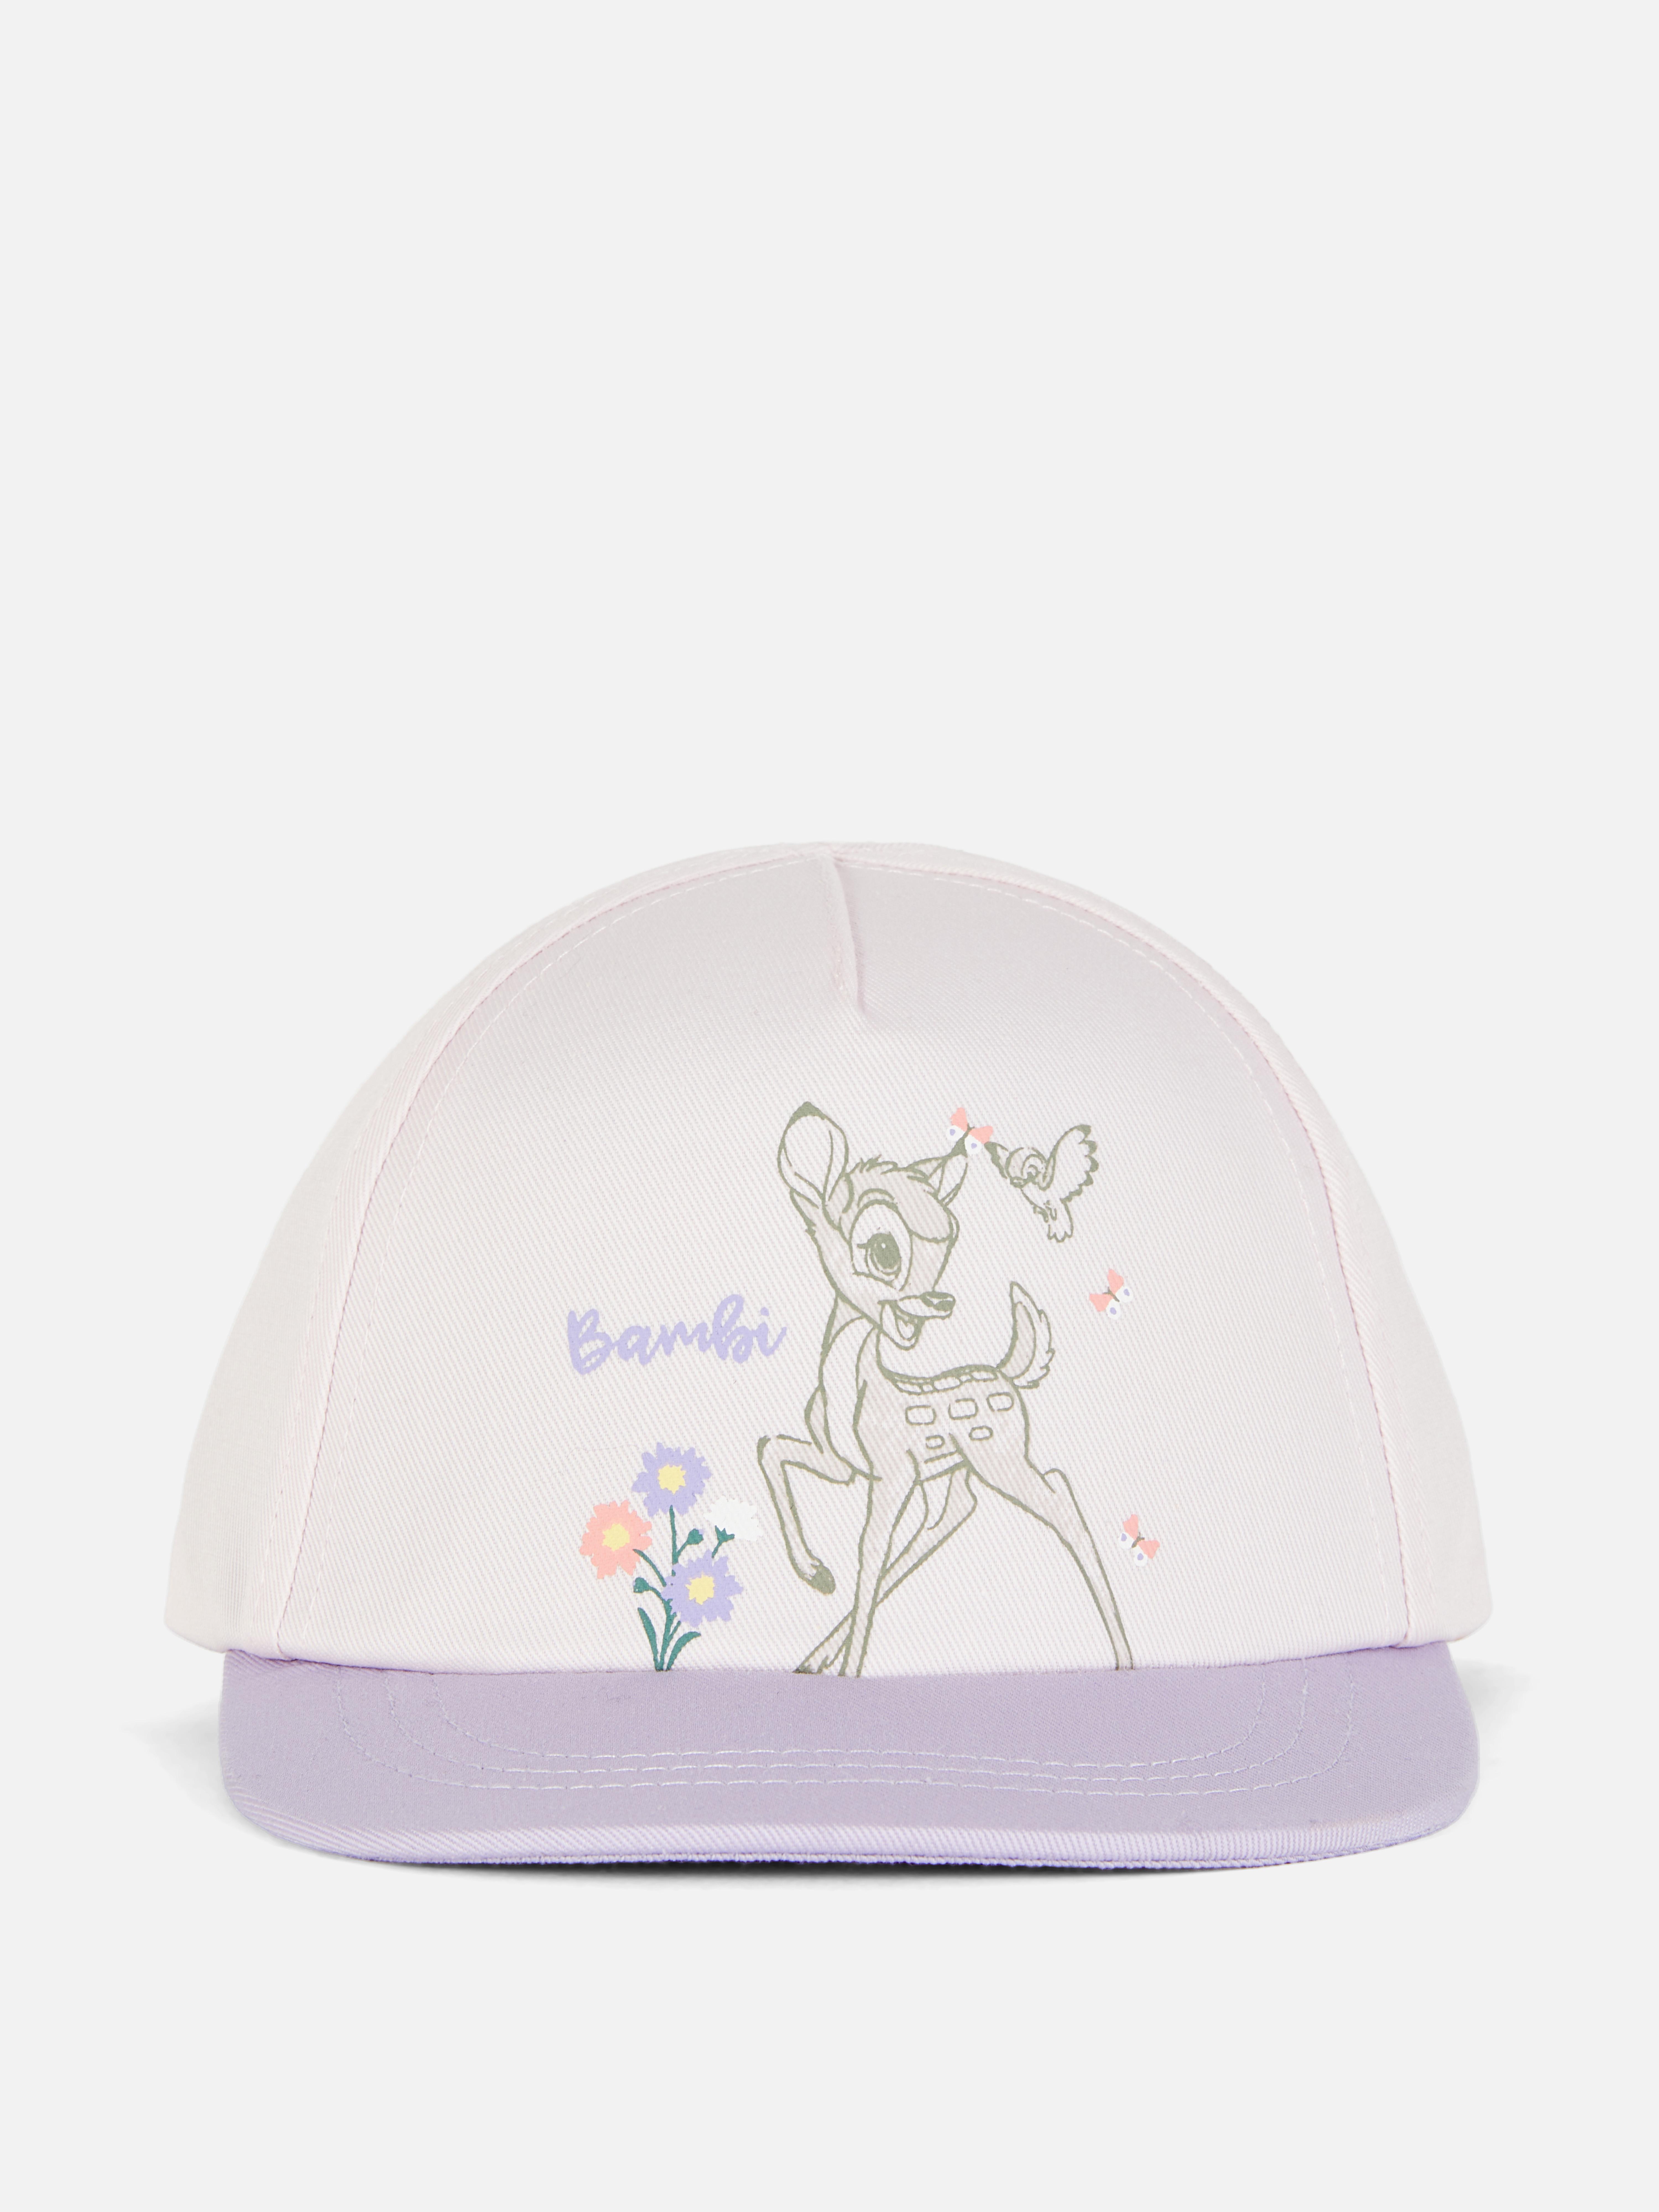 Disney’s Bambi Baseball Cap